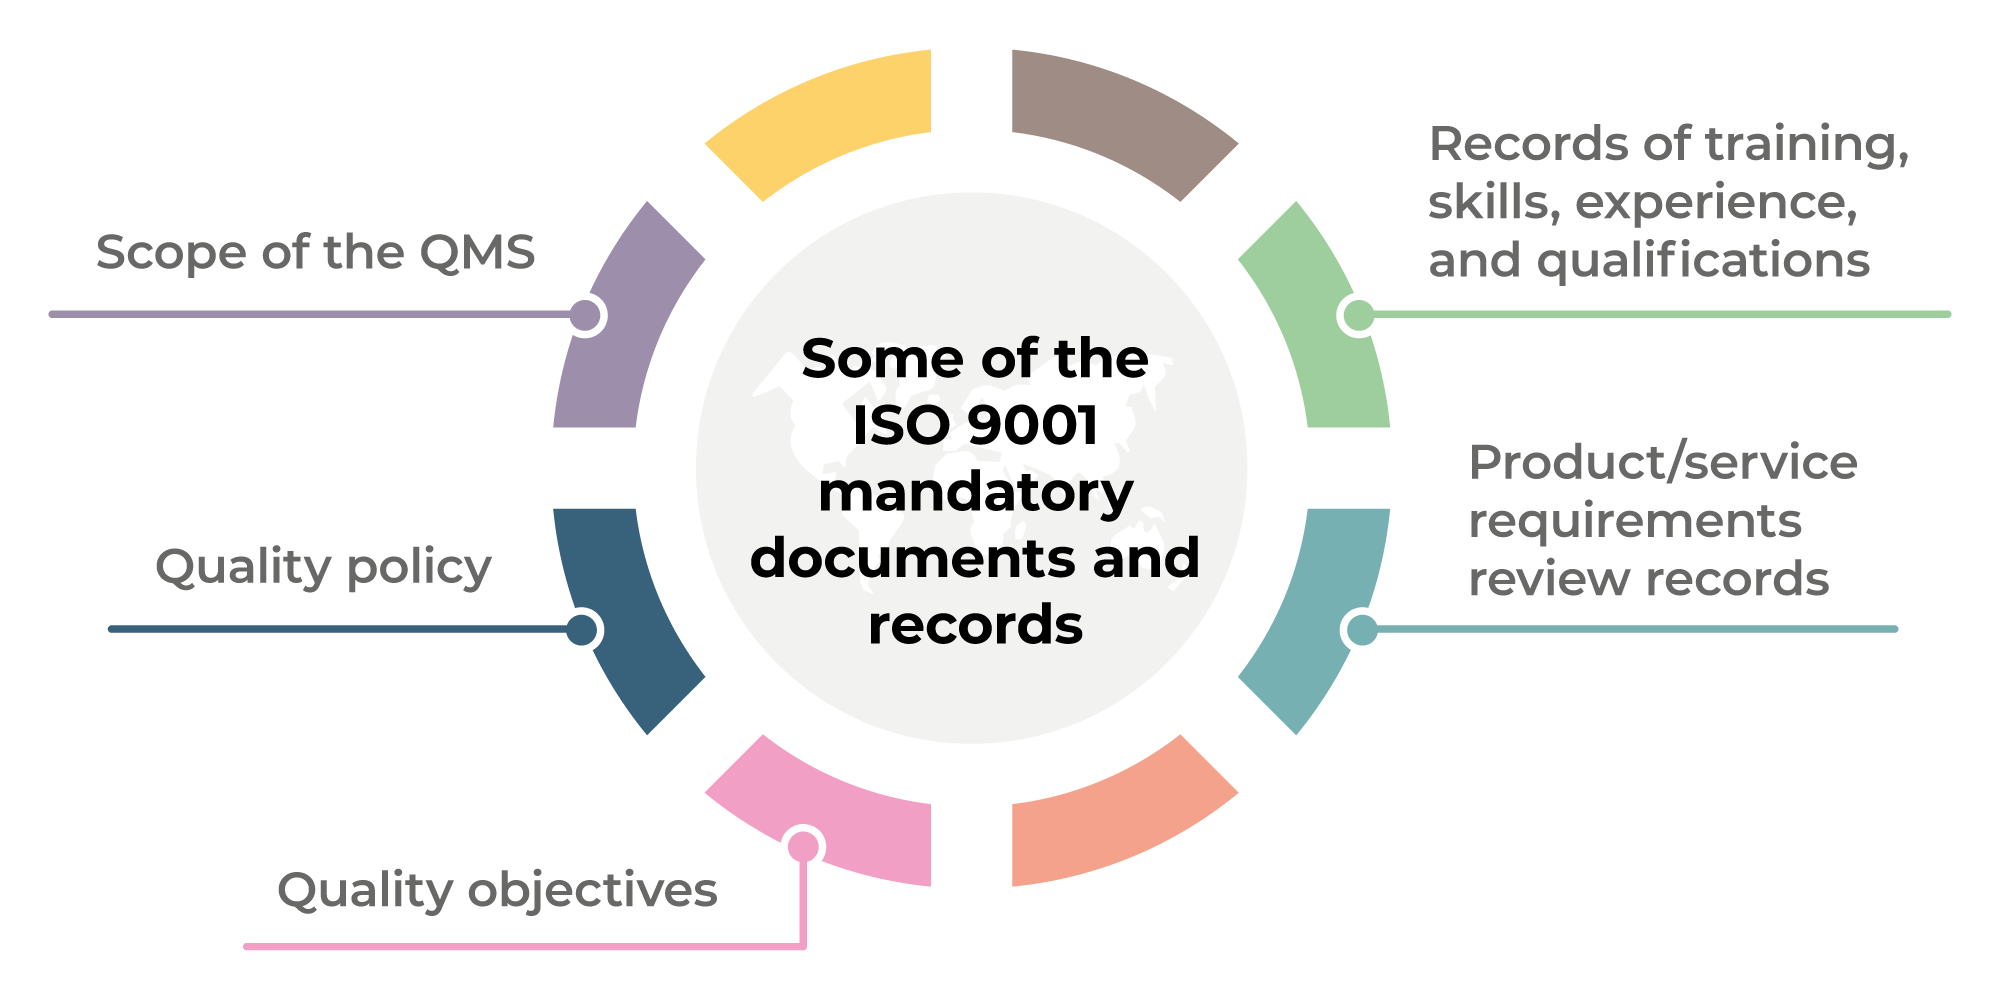 ISO 9001:2015 documents: List of mandatory policies & procedures